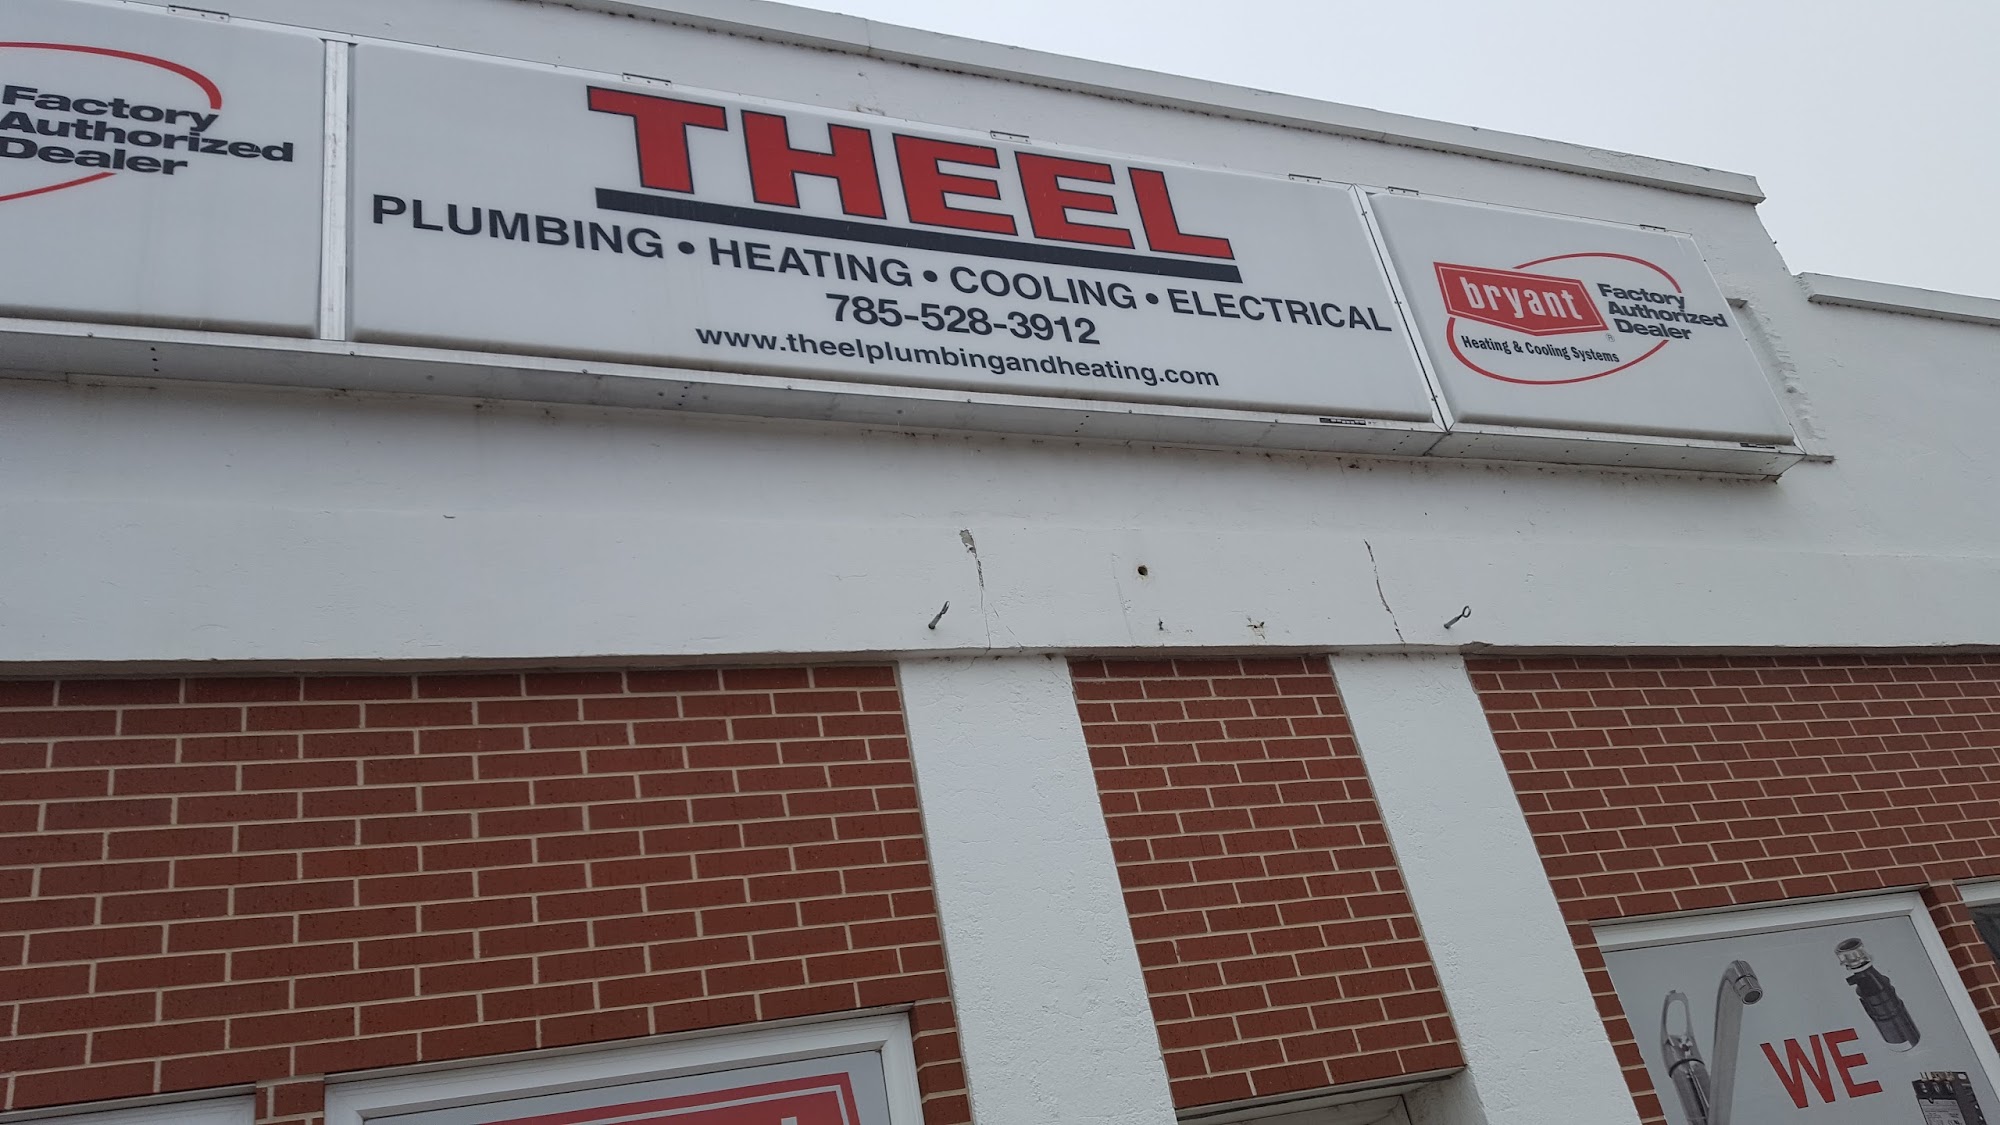 Theel Plumbing, Heating & Cooling, Inc. 426 Market St, Osage City Kansas 66523